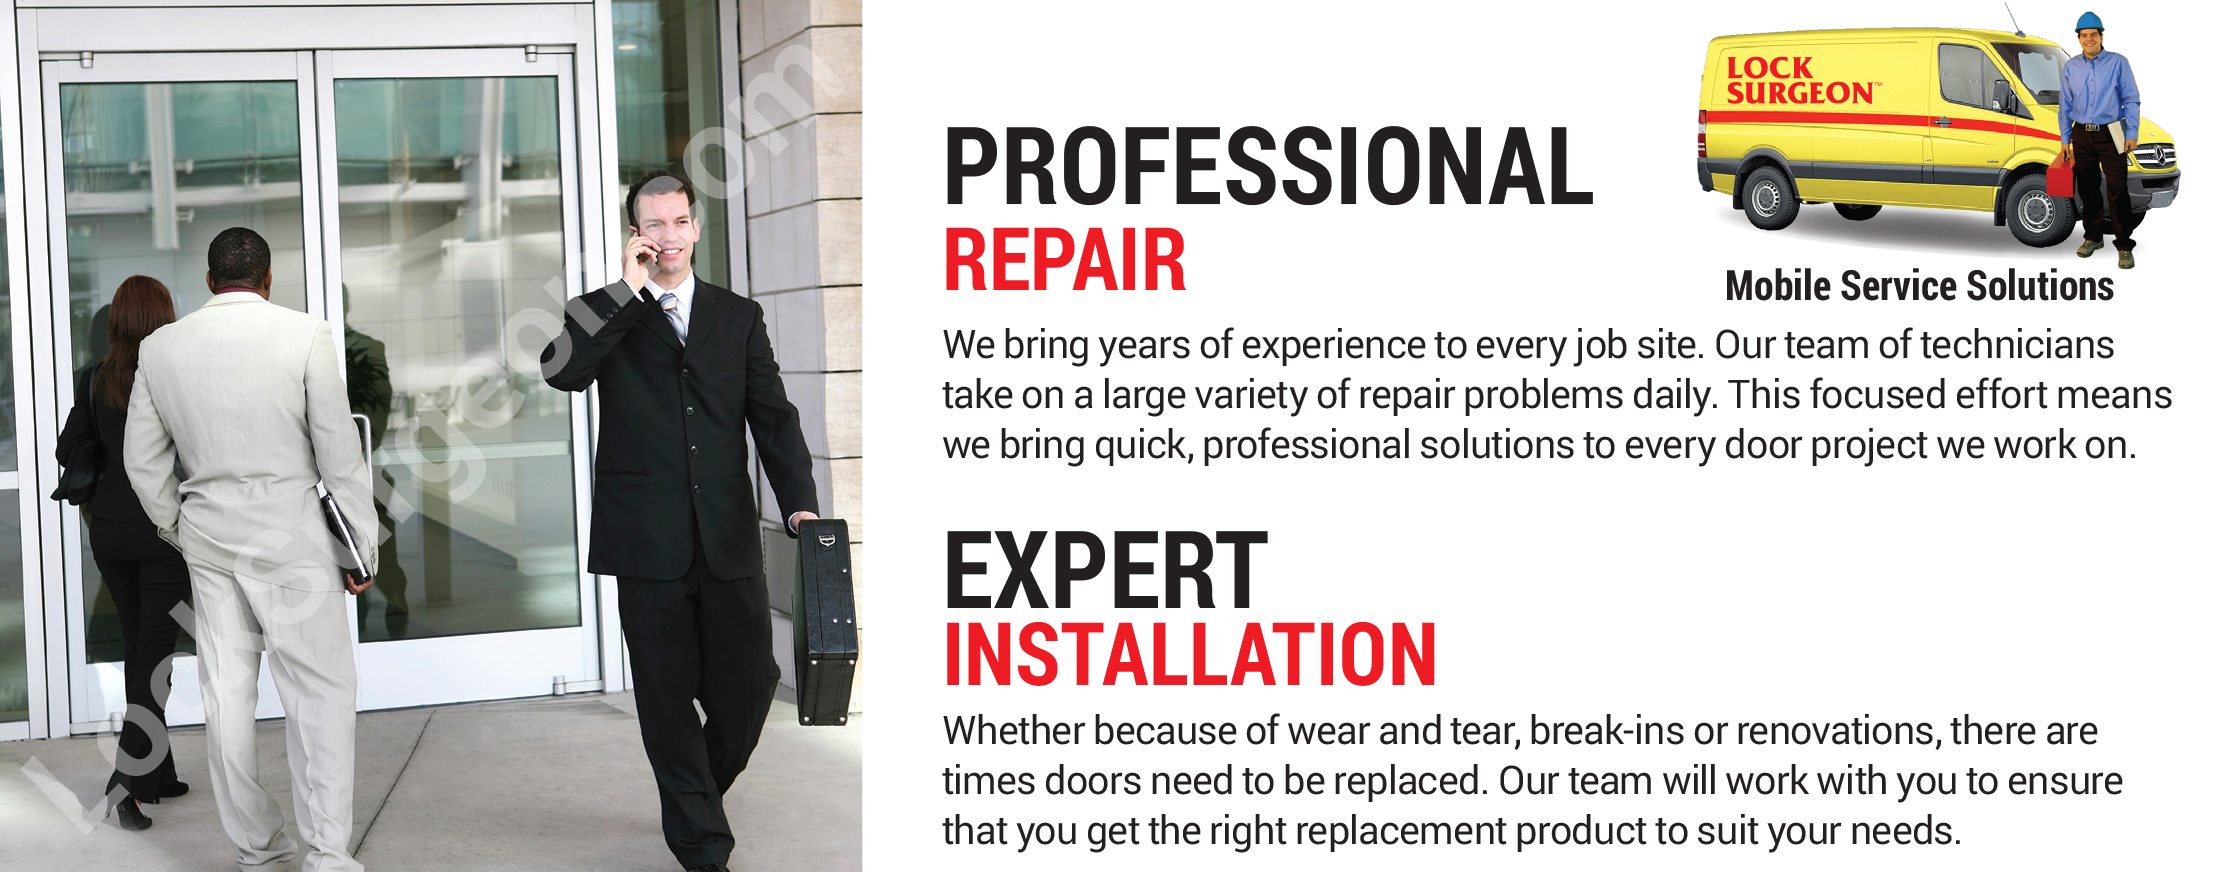 Lock Surgeon mobile door repair service for door break-in repair, hinge repair or door security.